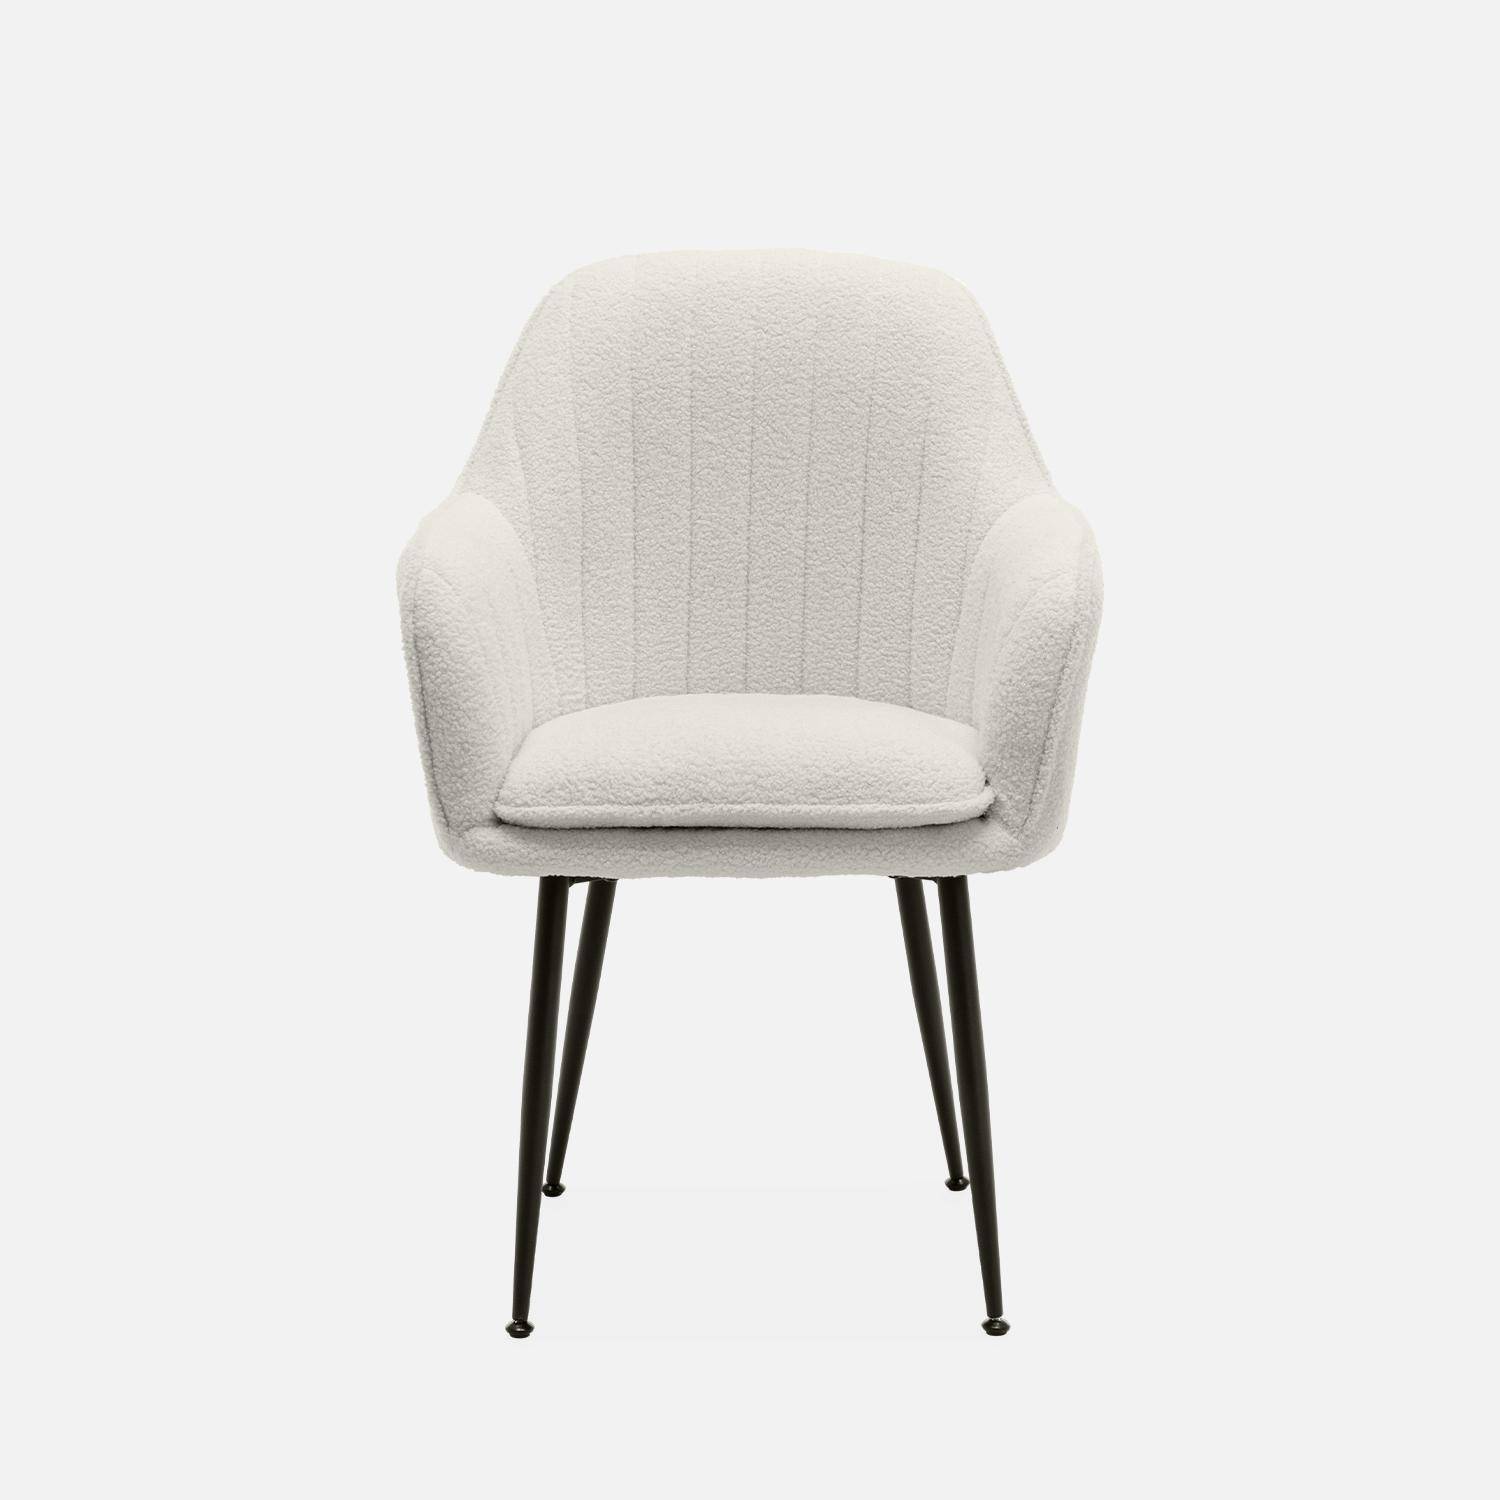 Boucle armchair with metal legs, 58x58x85cm - Shella Boucle - White,sweeek,Photo4